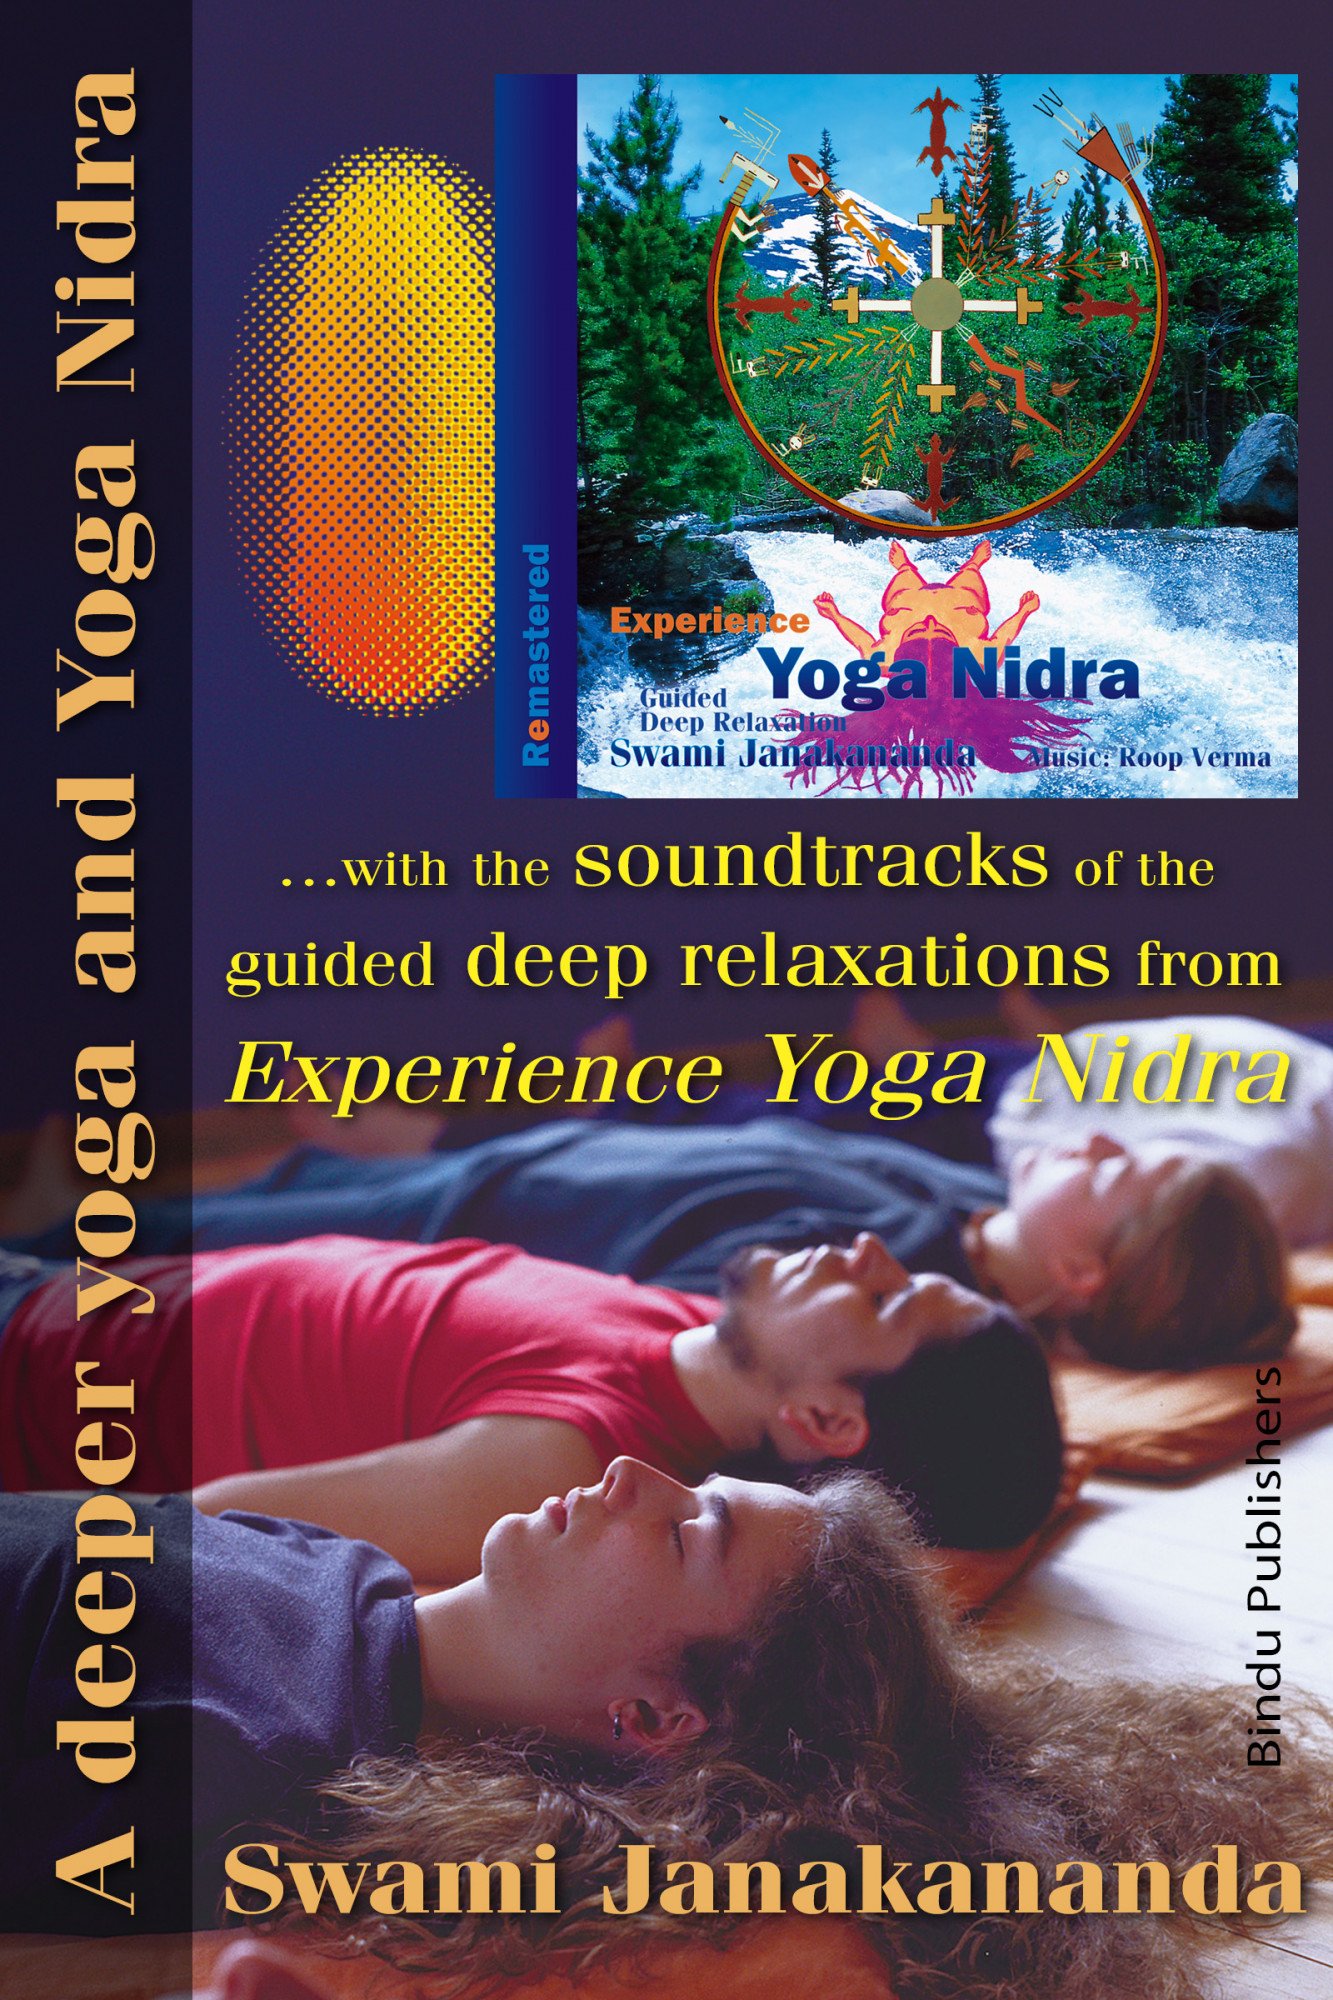 A deeper yoga and Yoga Nidra cover